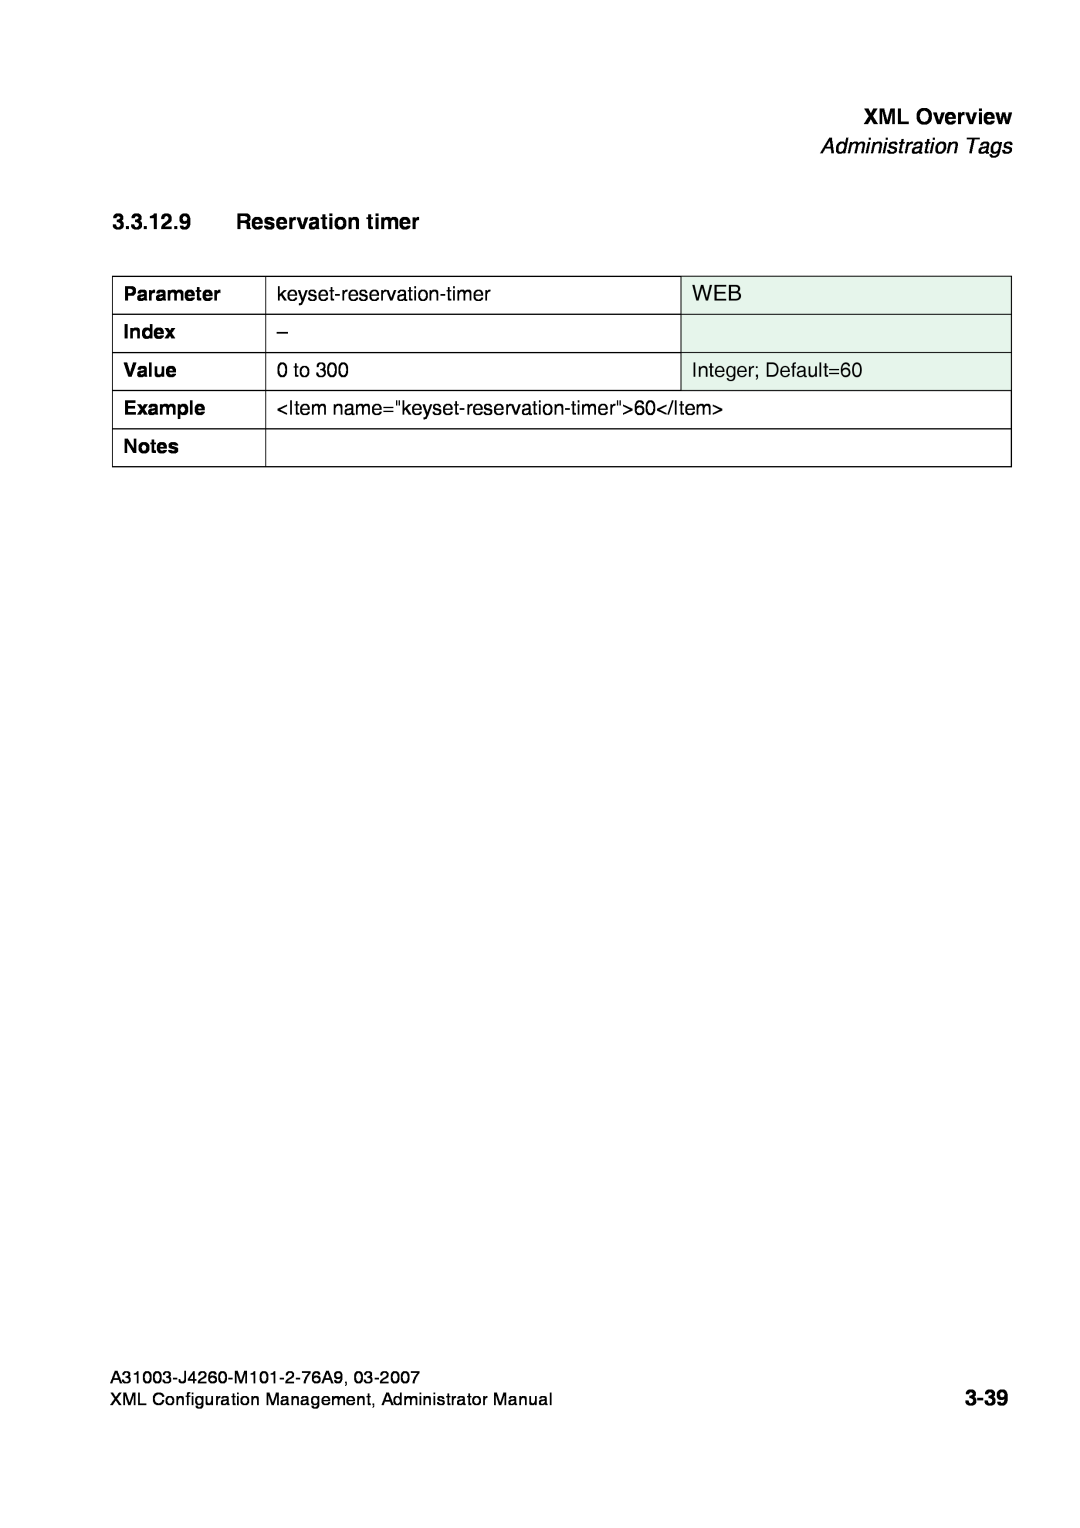 Siemens 410 S V6.0, 420 S V6.0 manual Reservation timer, 3-39, XML Overview, Administration Tags 